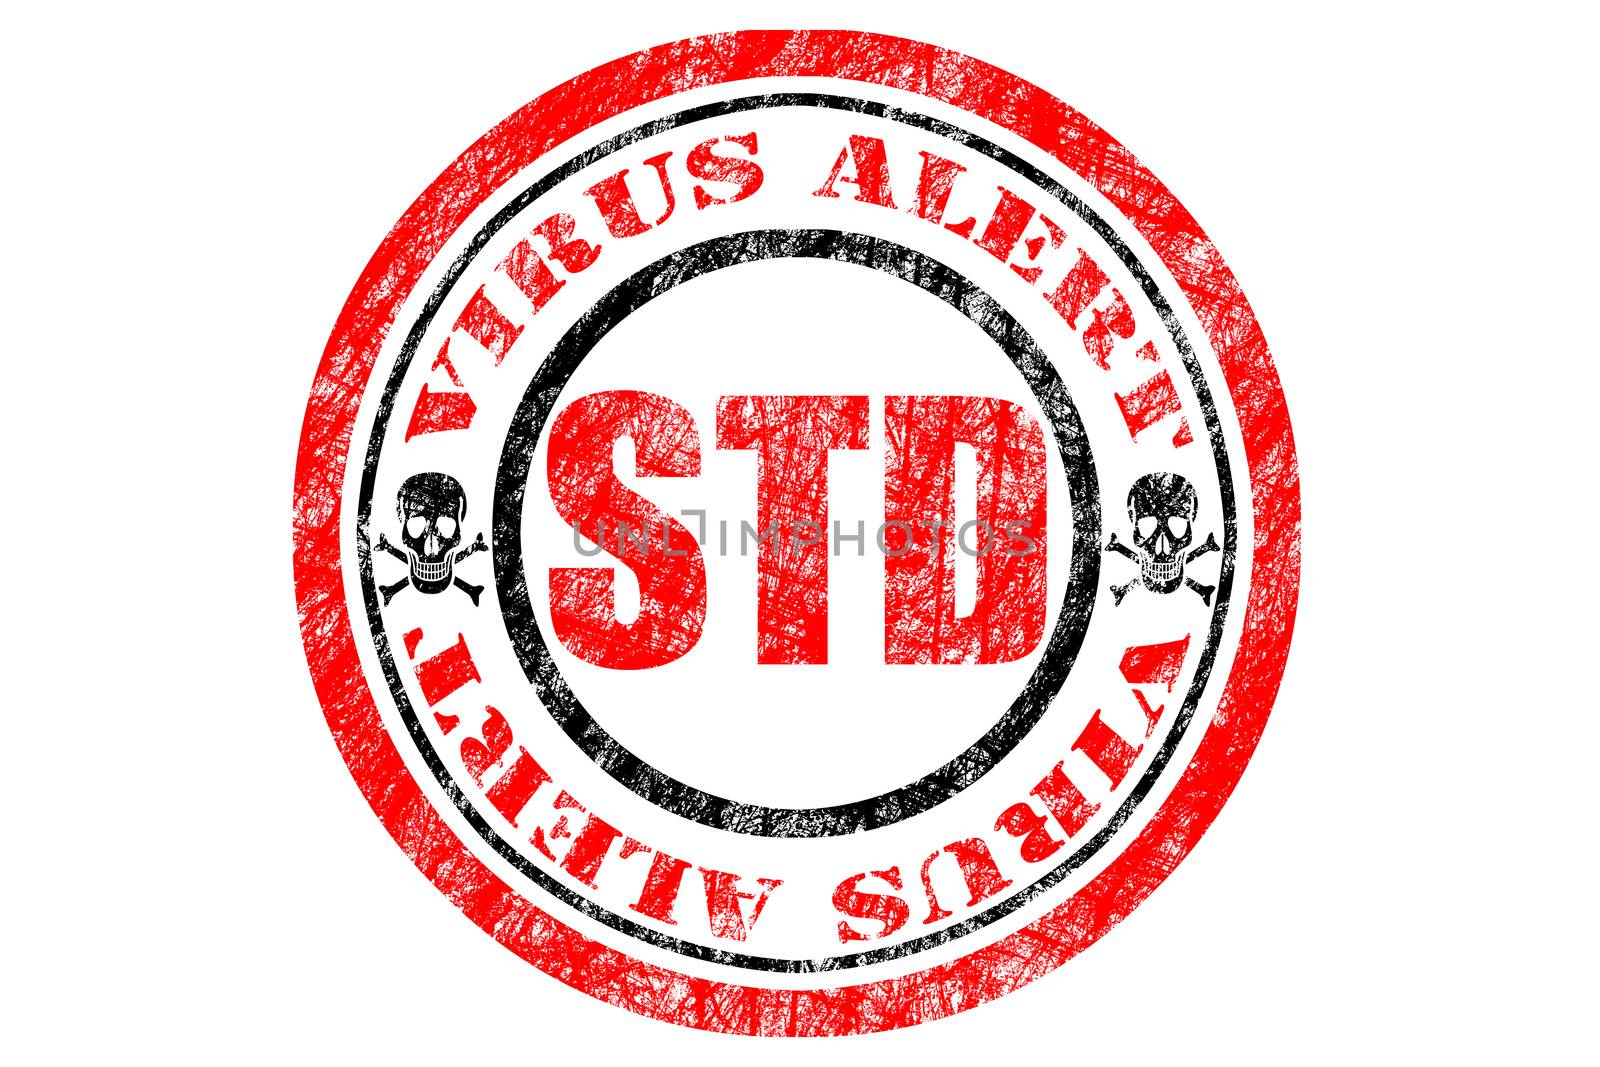 STD Virus Alert Concept